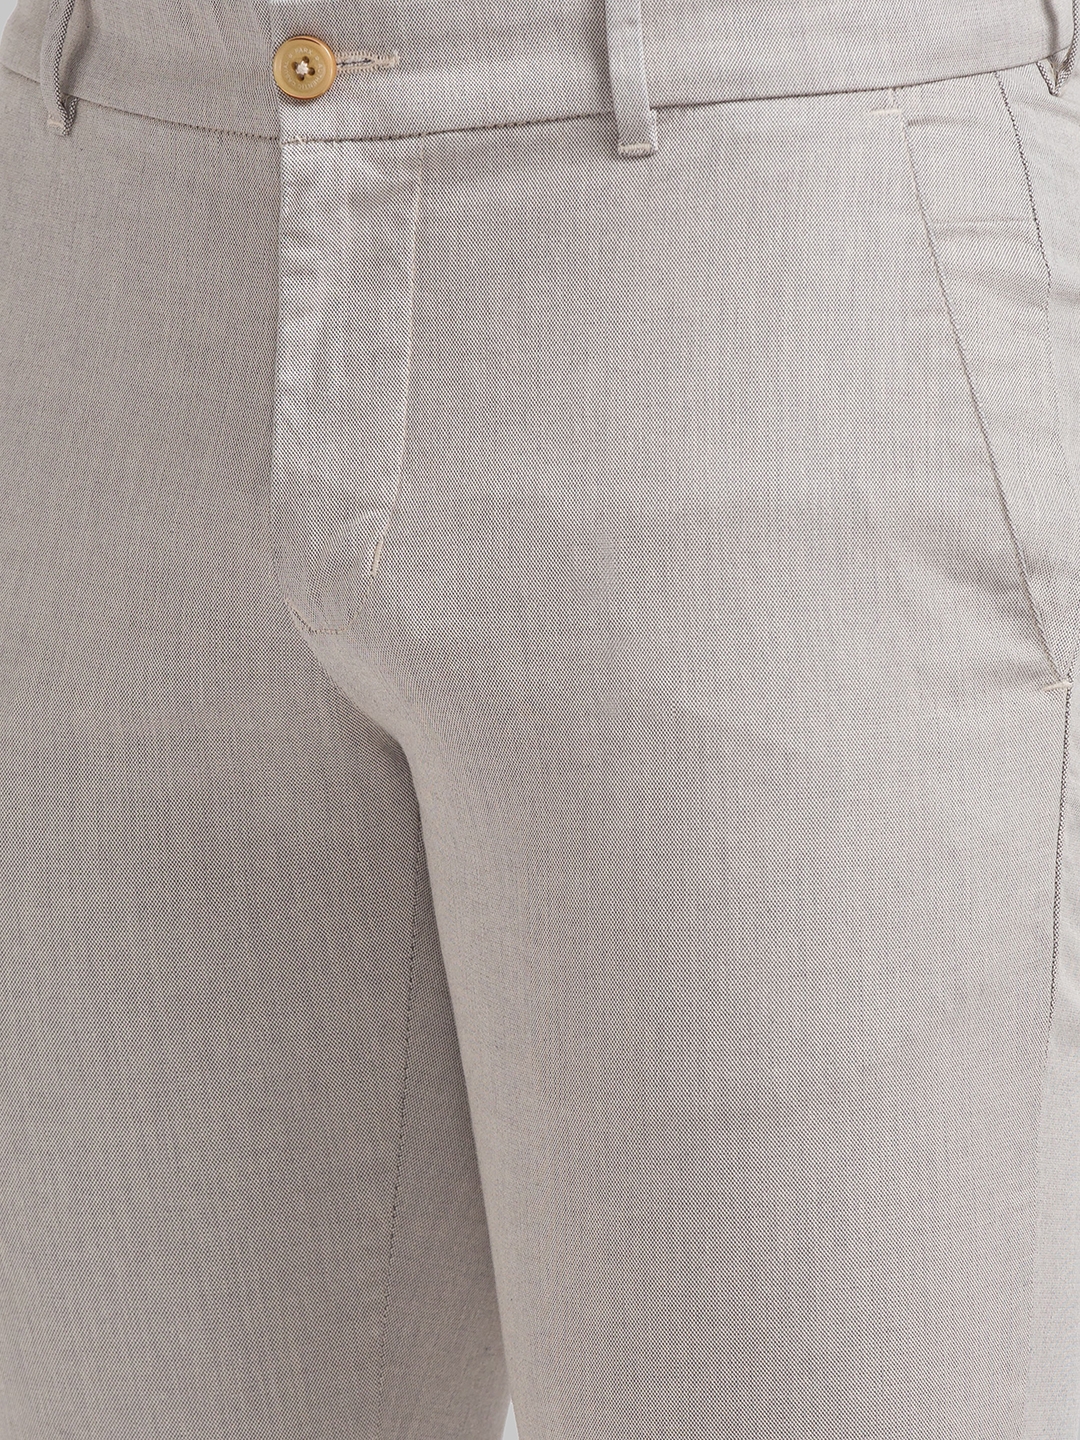 PARX Grey Trouser